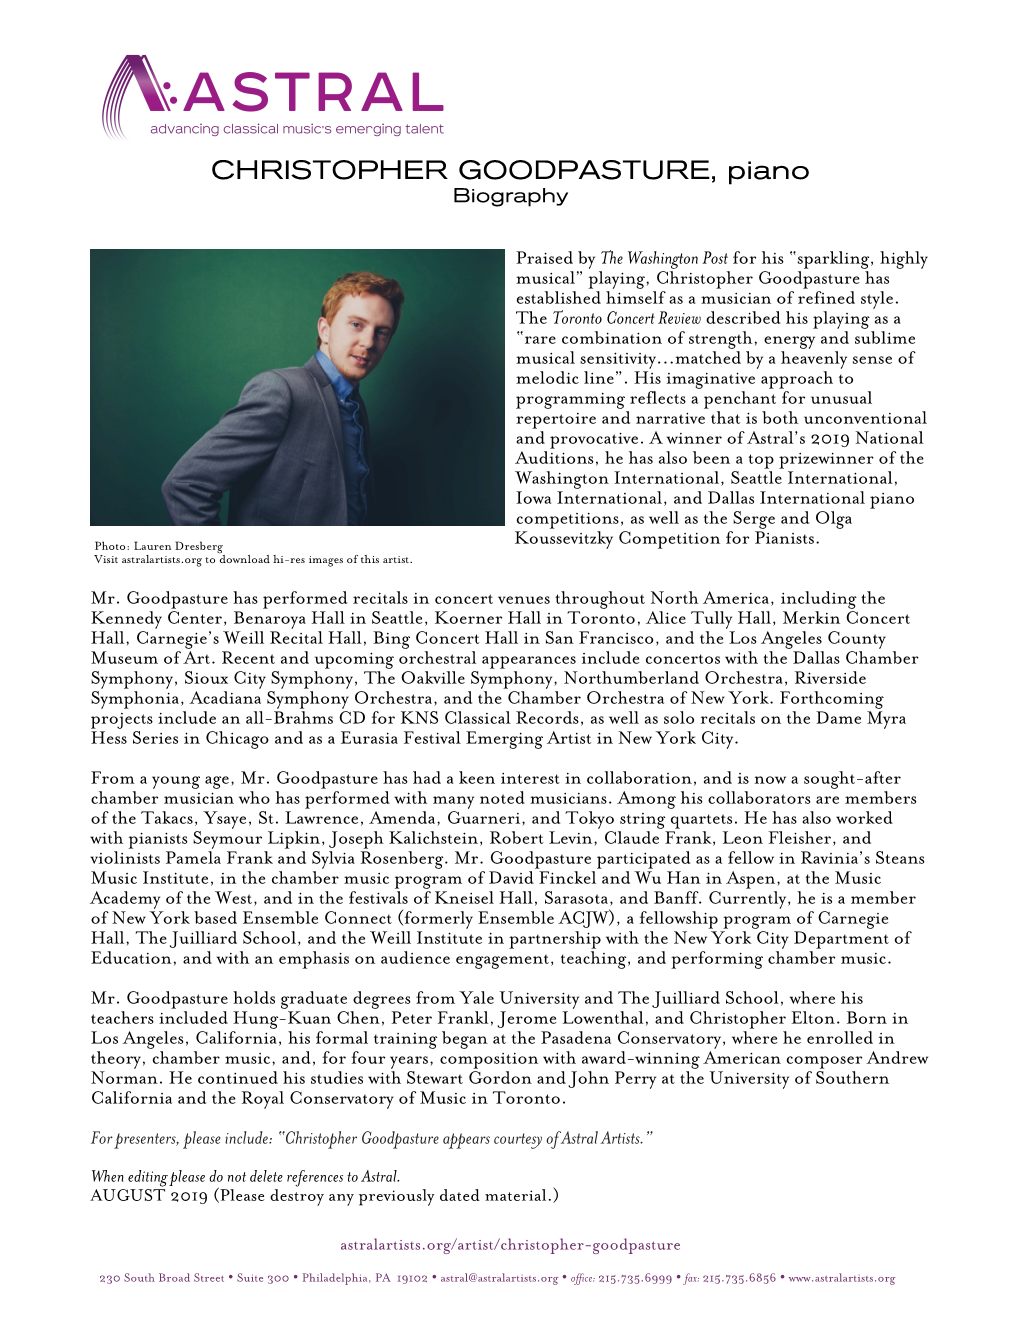 CHRISTOPHER GOODPASTURE, Piano Biography